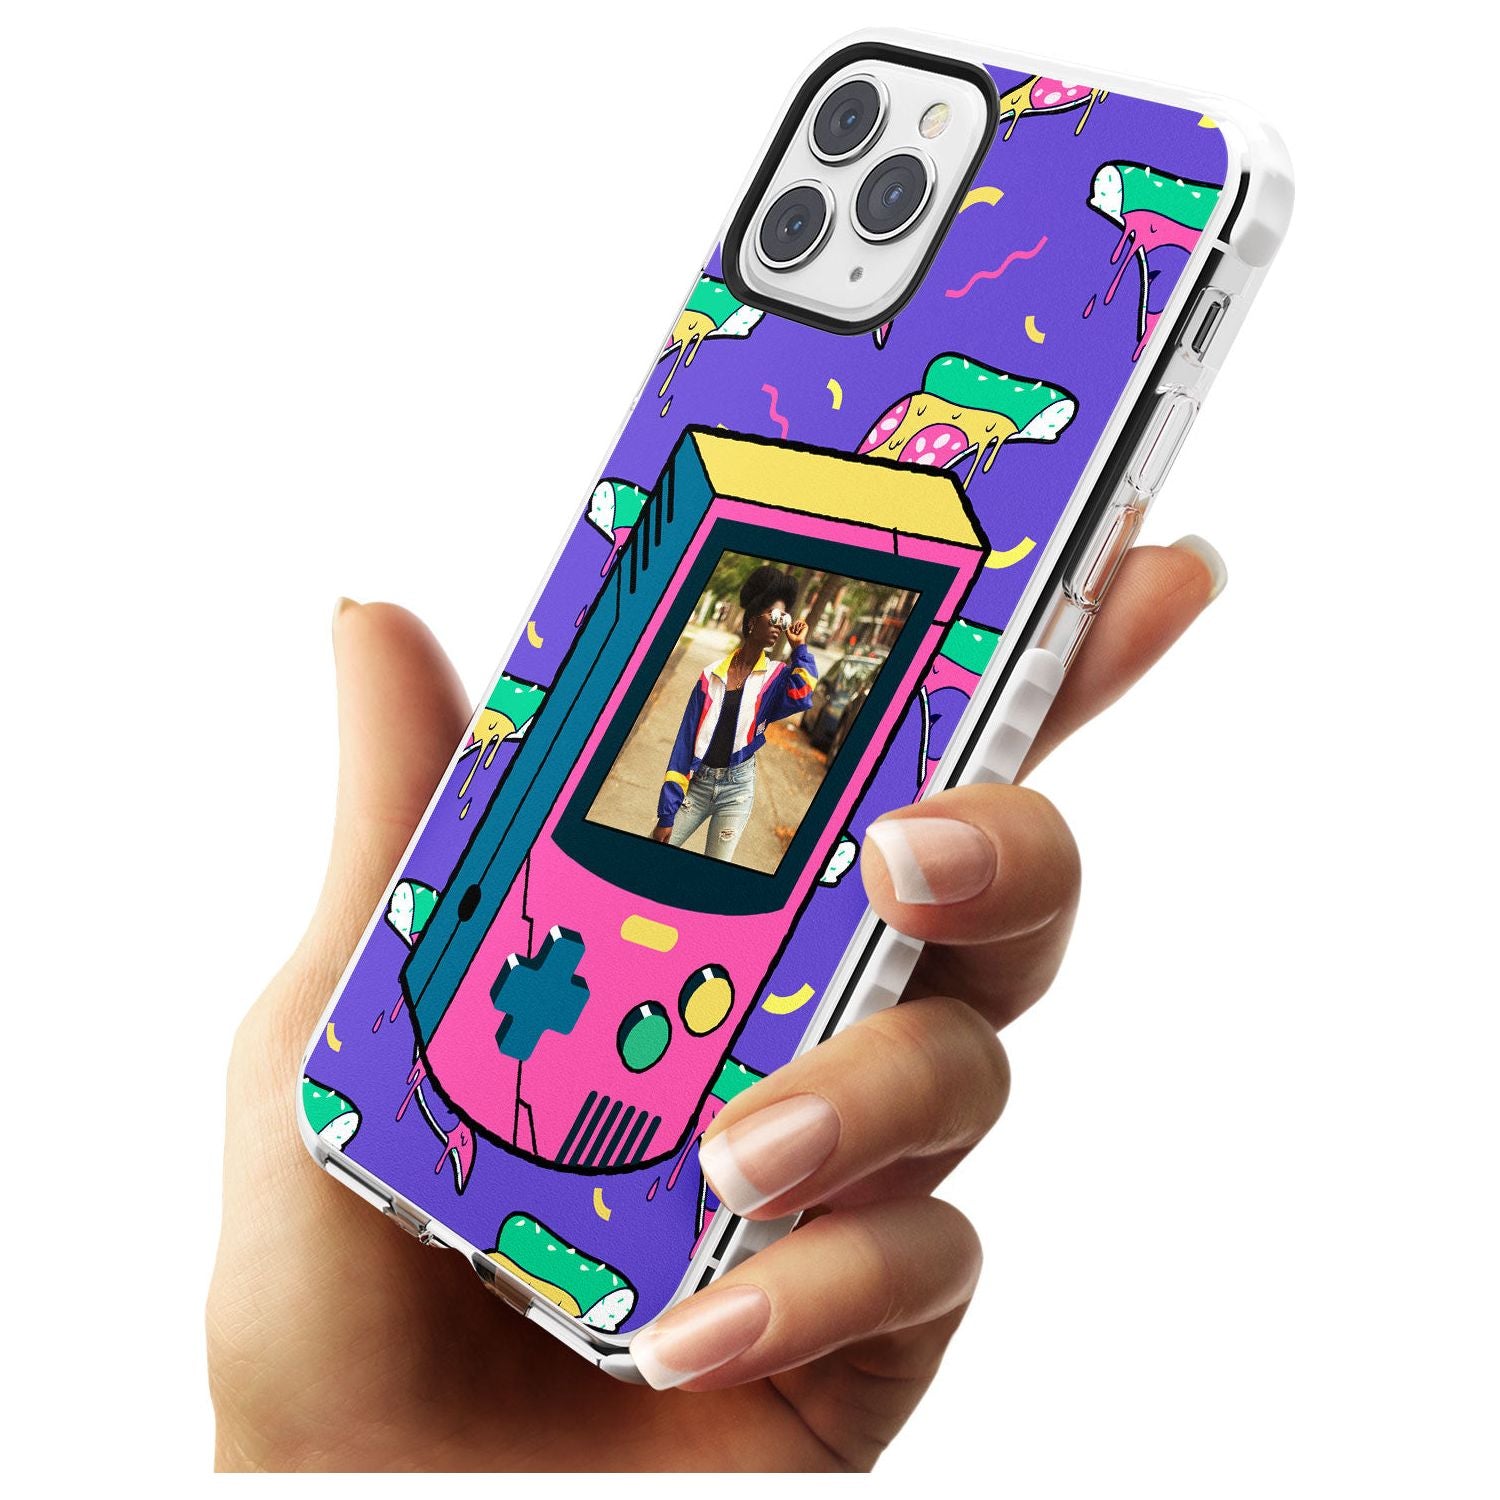 Personalised Retro Game Photo Case Impact Phone Case for iPhone 11 Pro Max